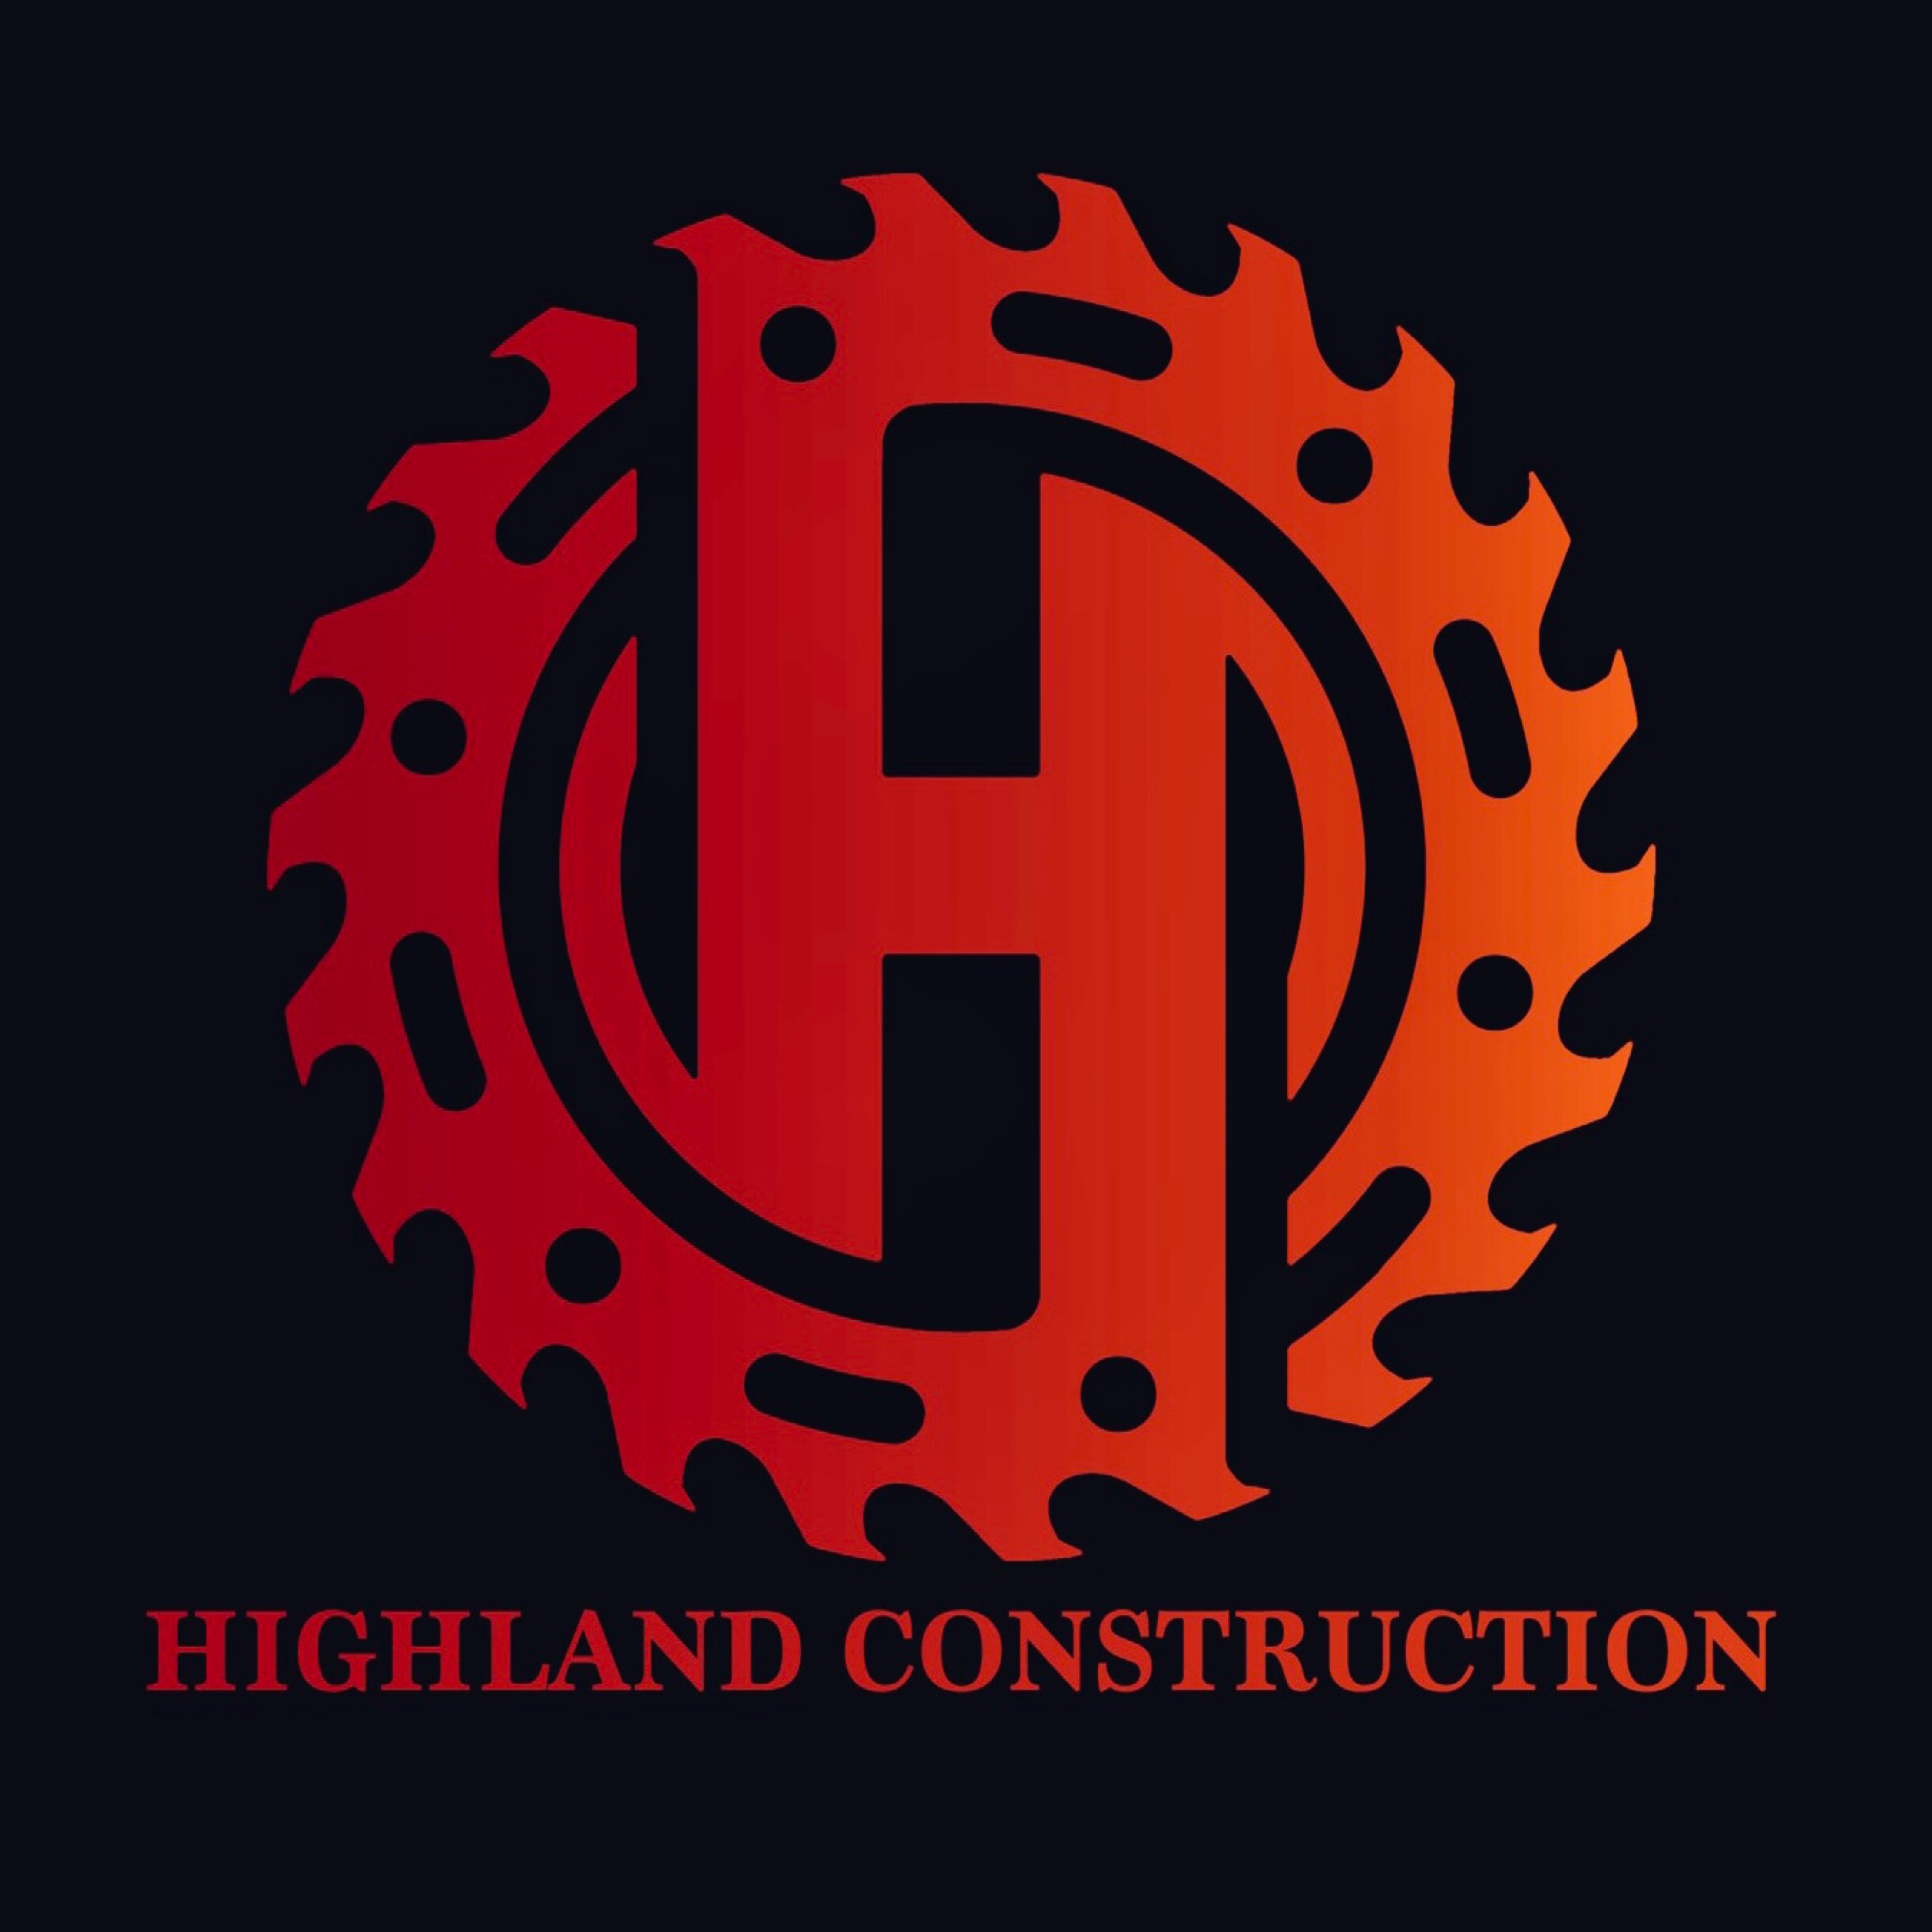 ACE Construction, LLC Logo